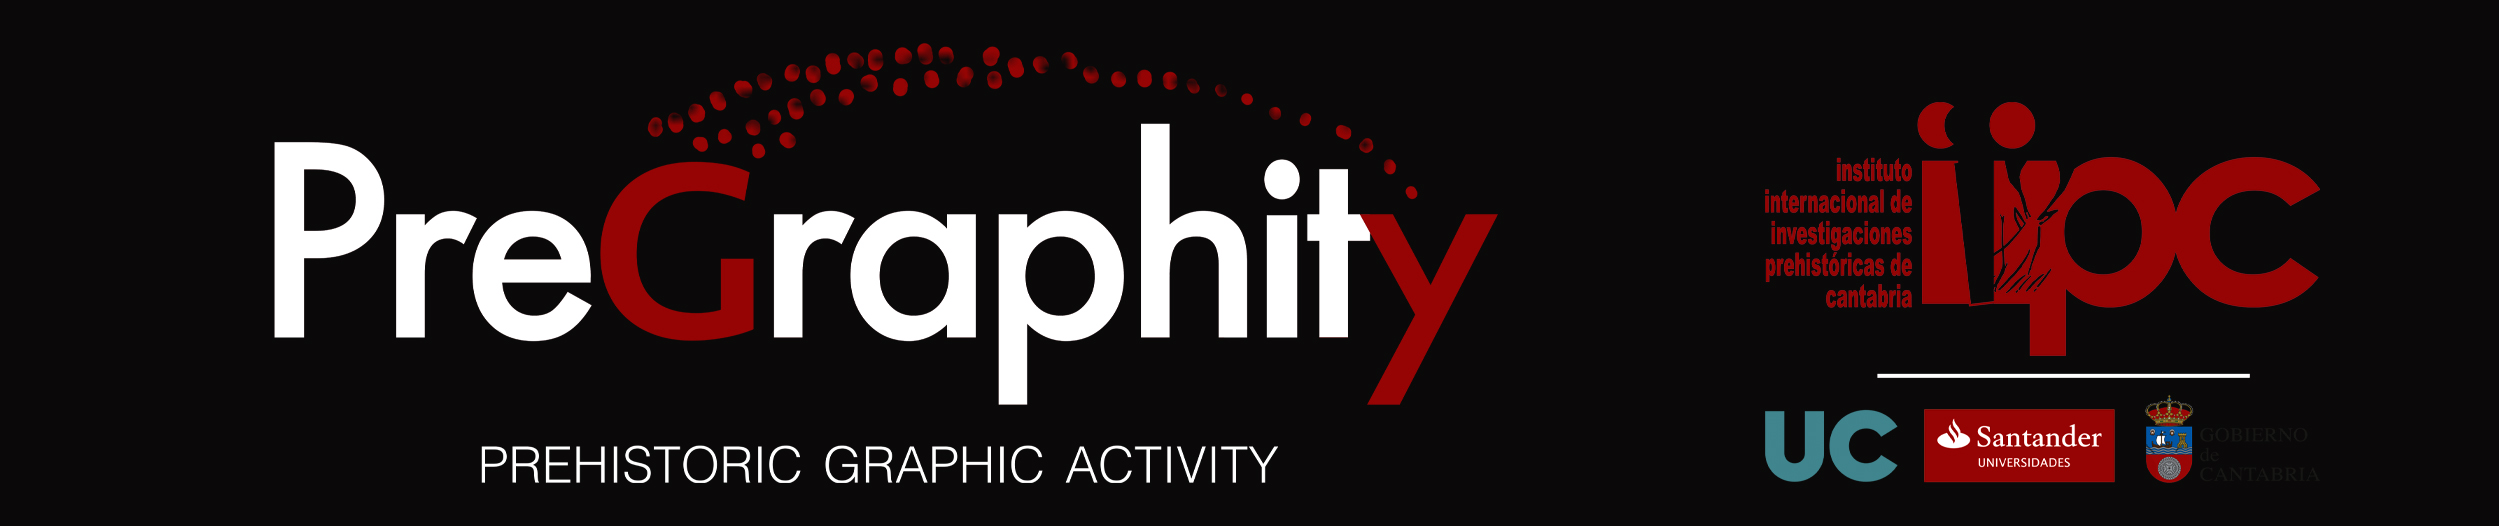 PreGraphity Logo